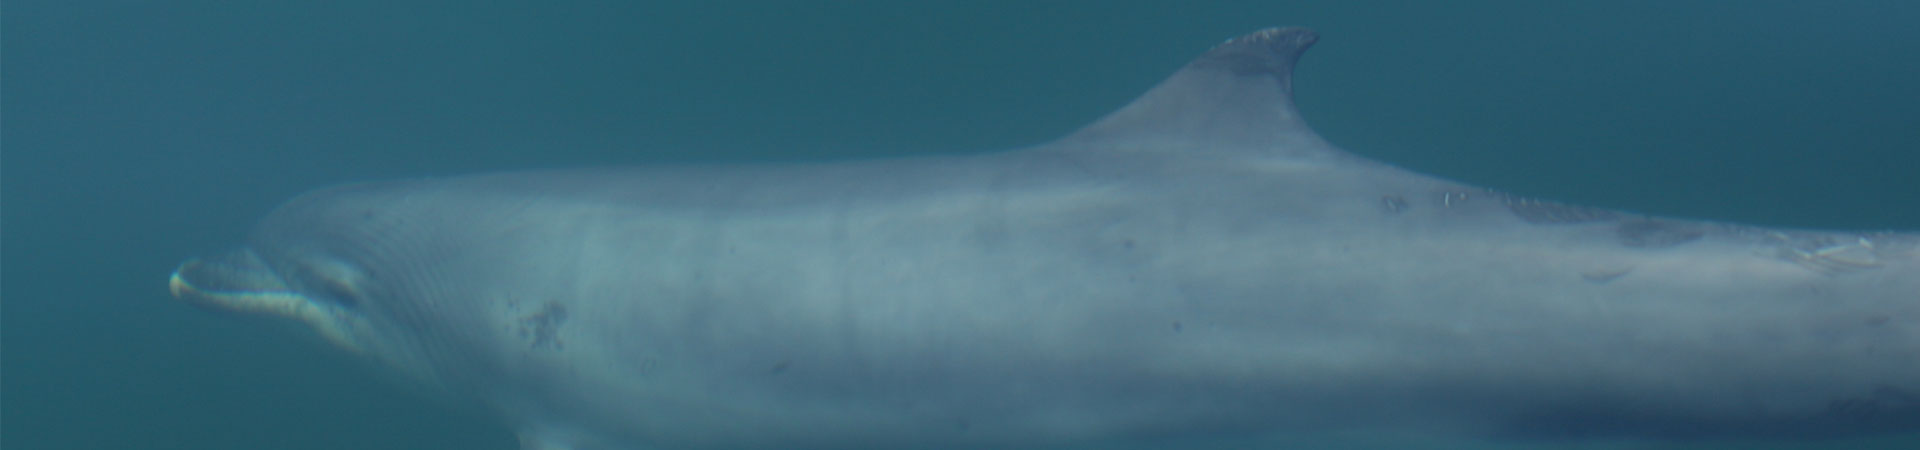 Photo of dolphin underwater